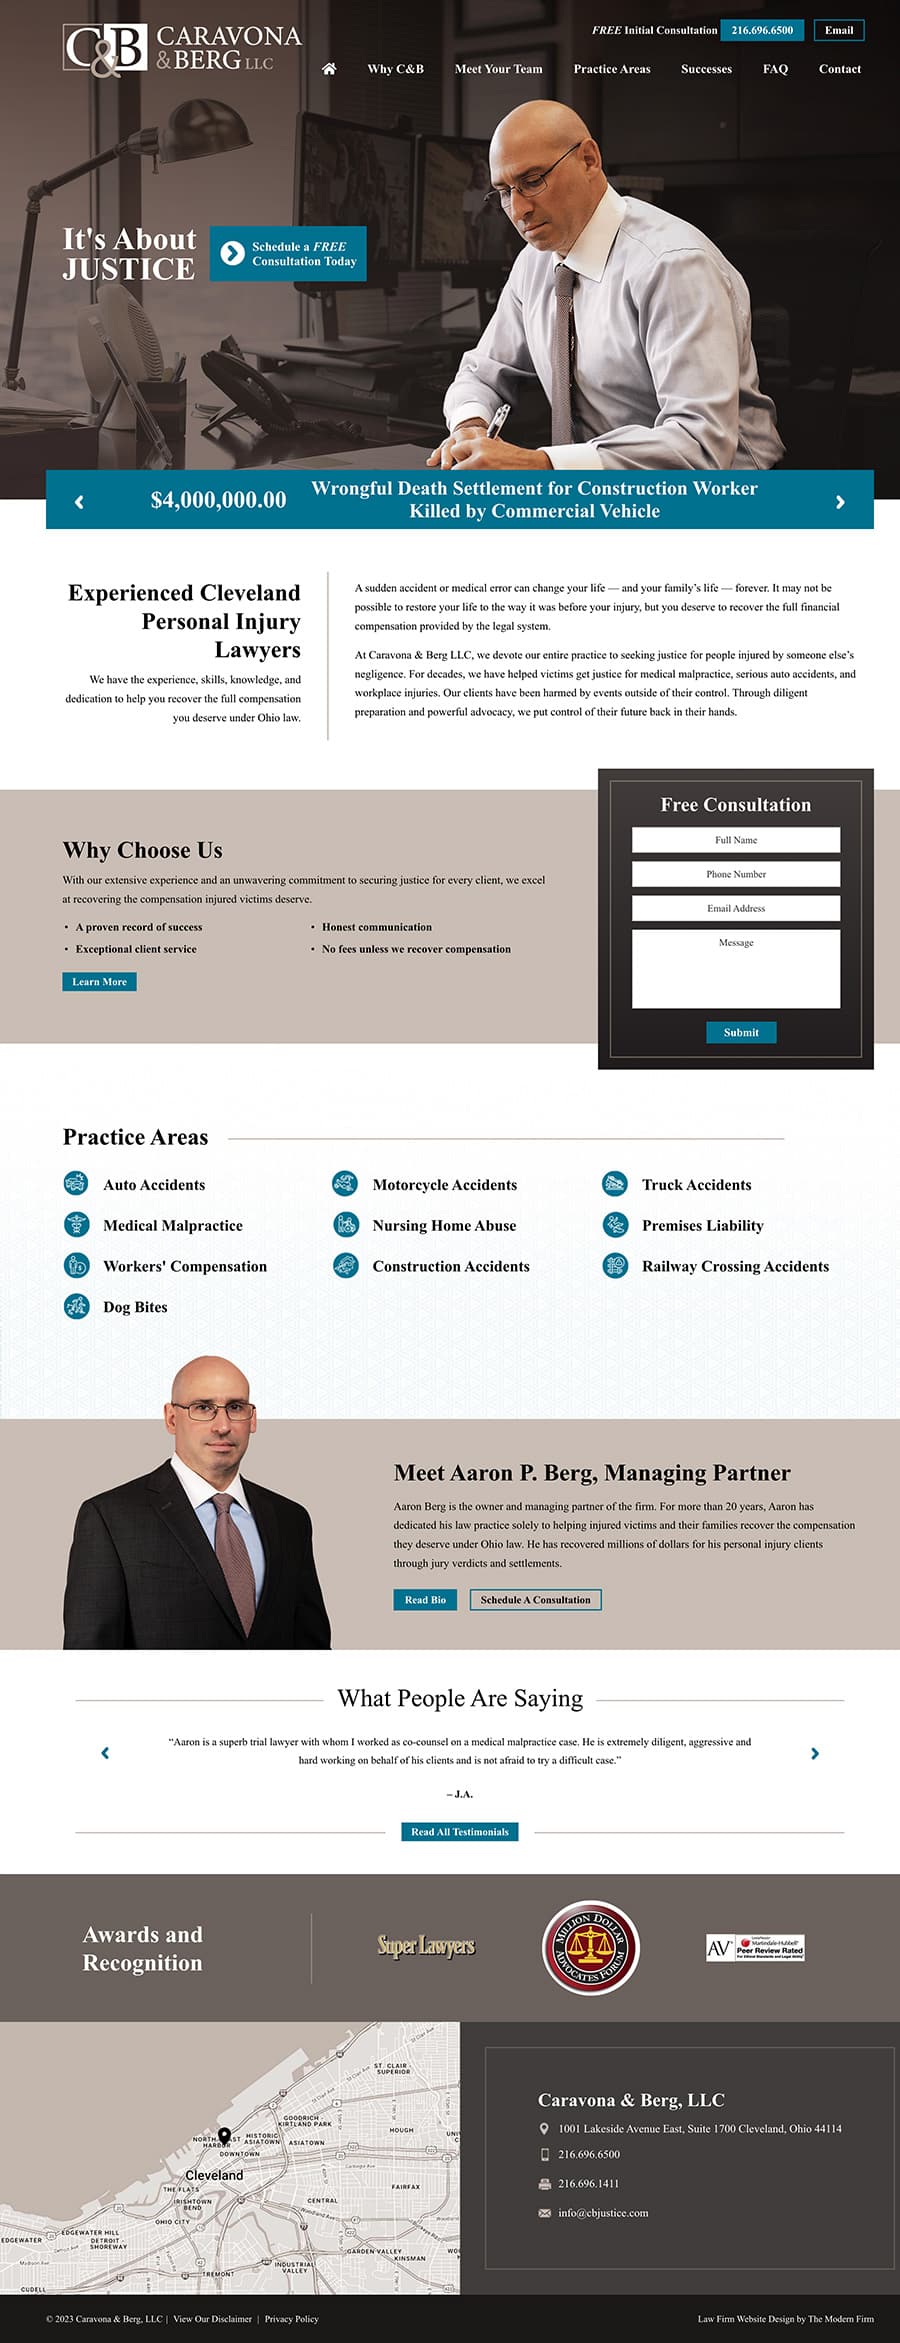 Law Firm Website Design for Caravona & Berg, LLC